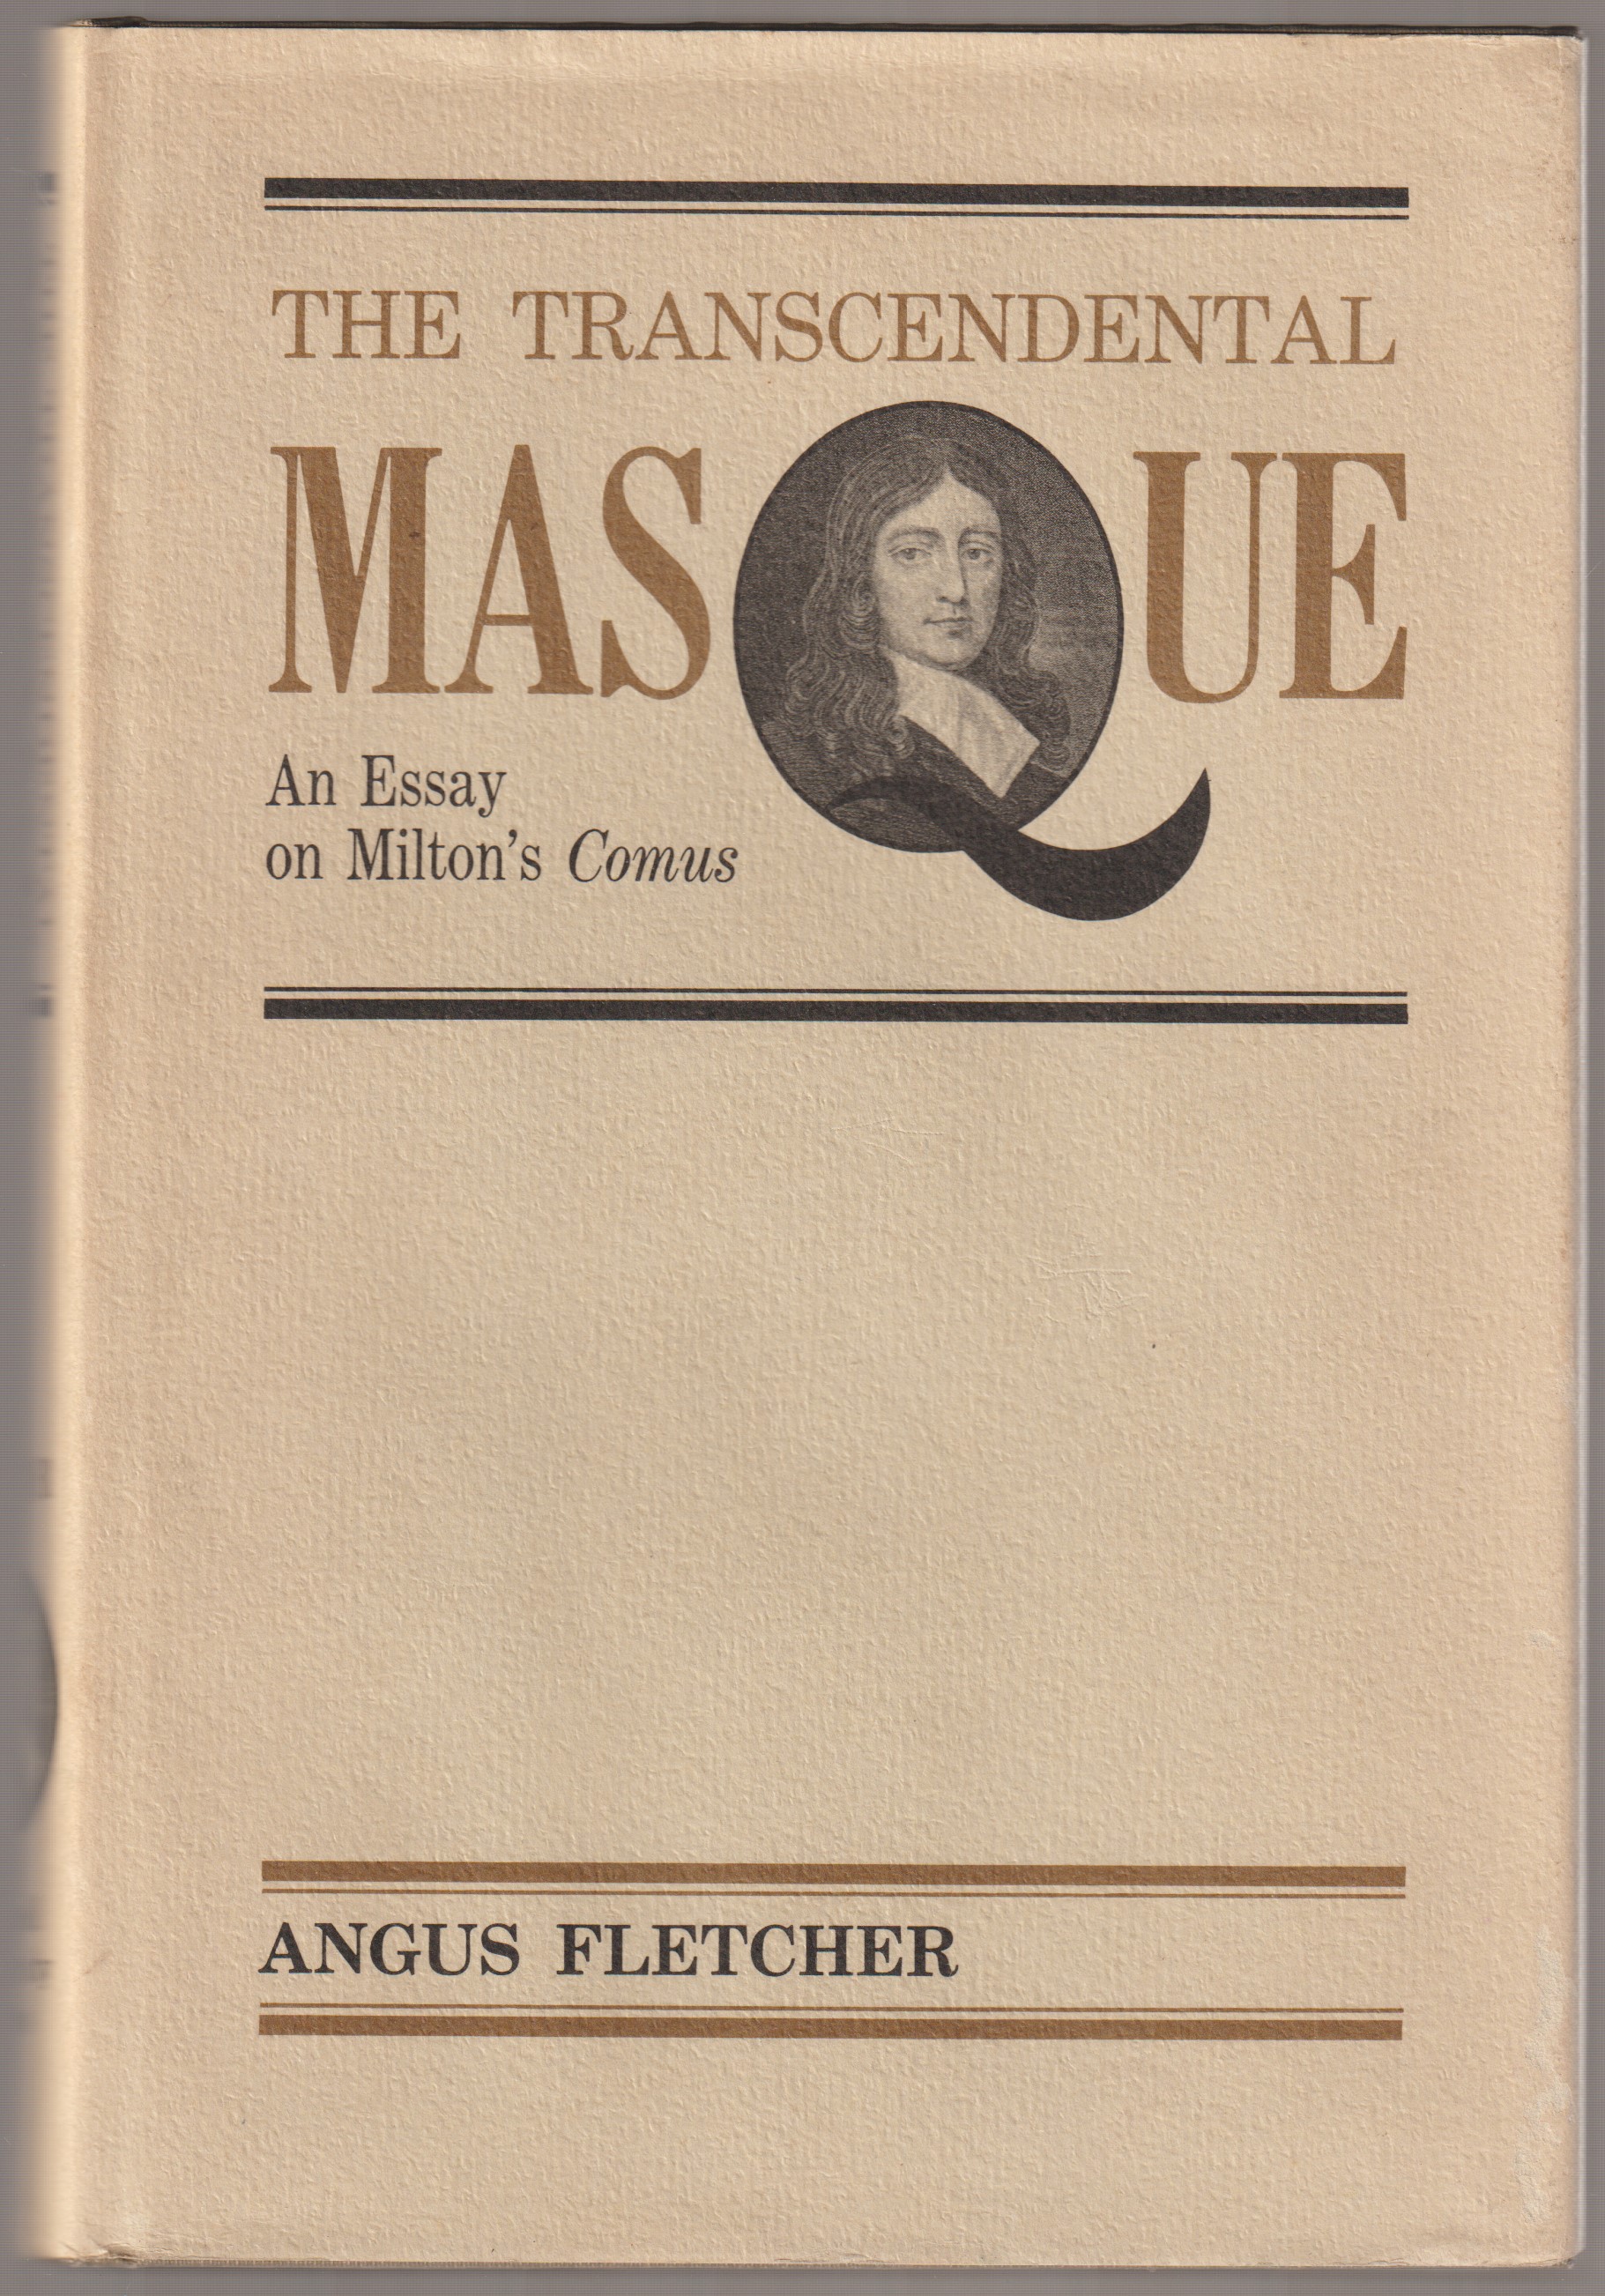 The transcendental masque : an essay on Milton's Comus